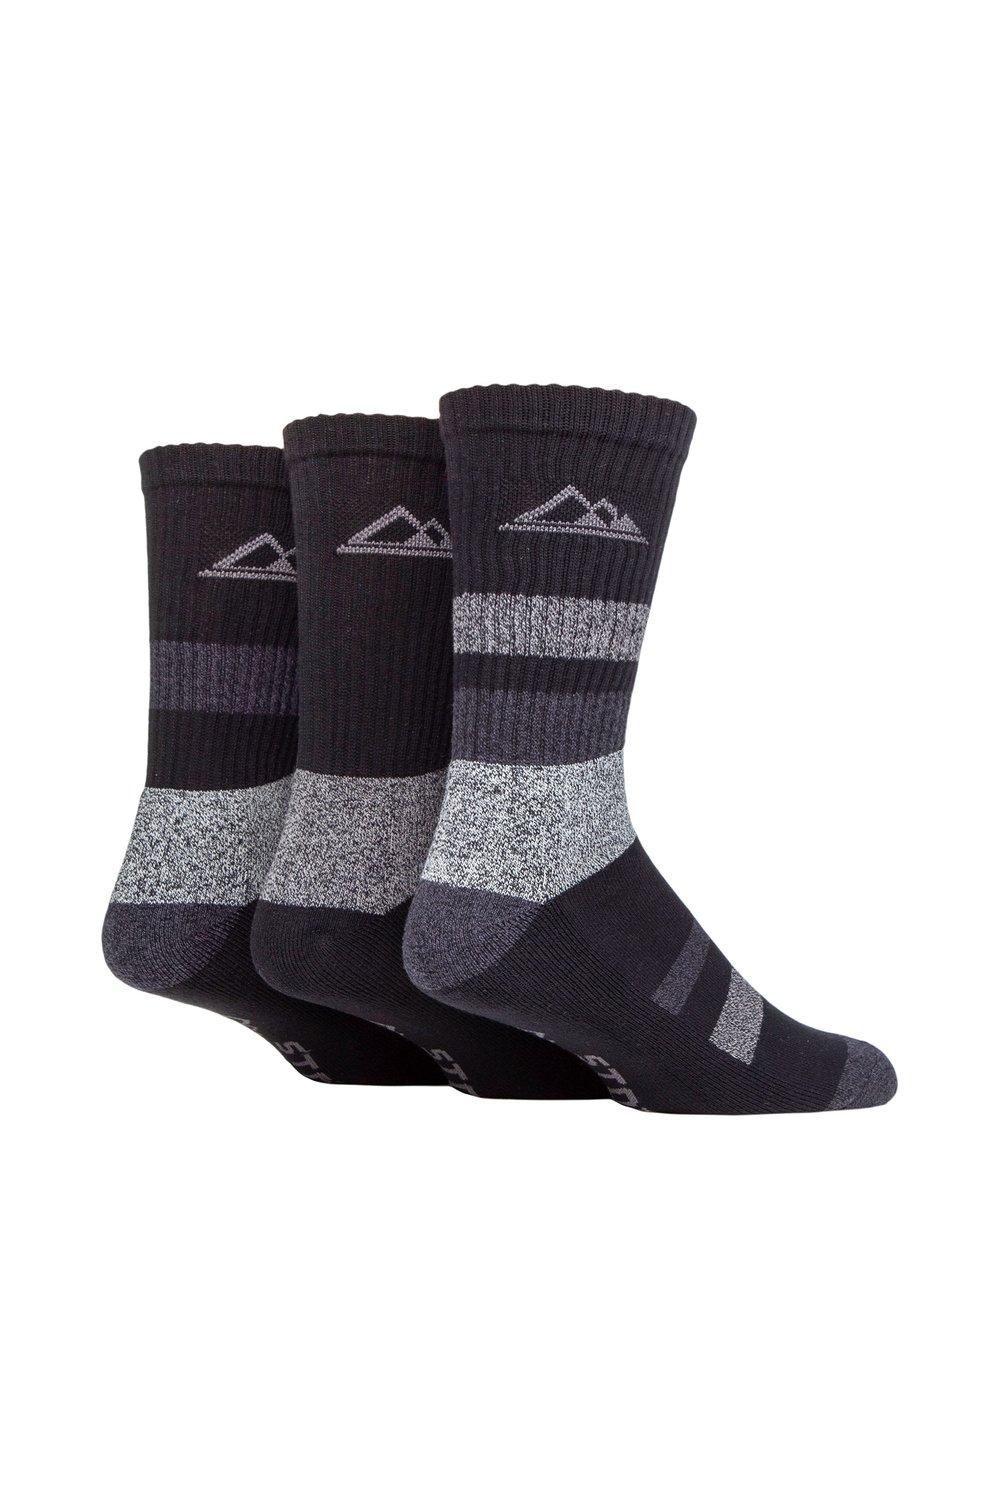 3 Pair Striped Boot Socks